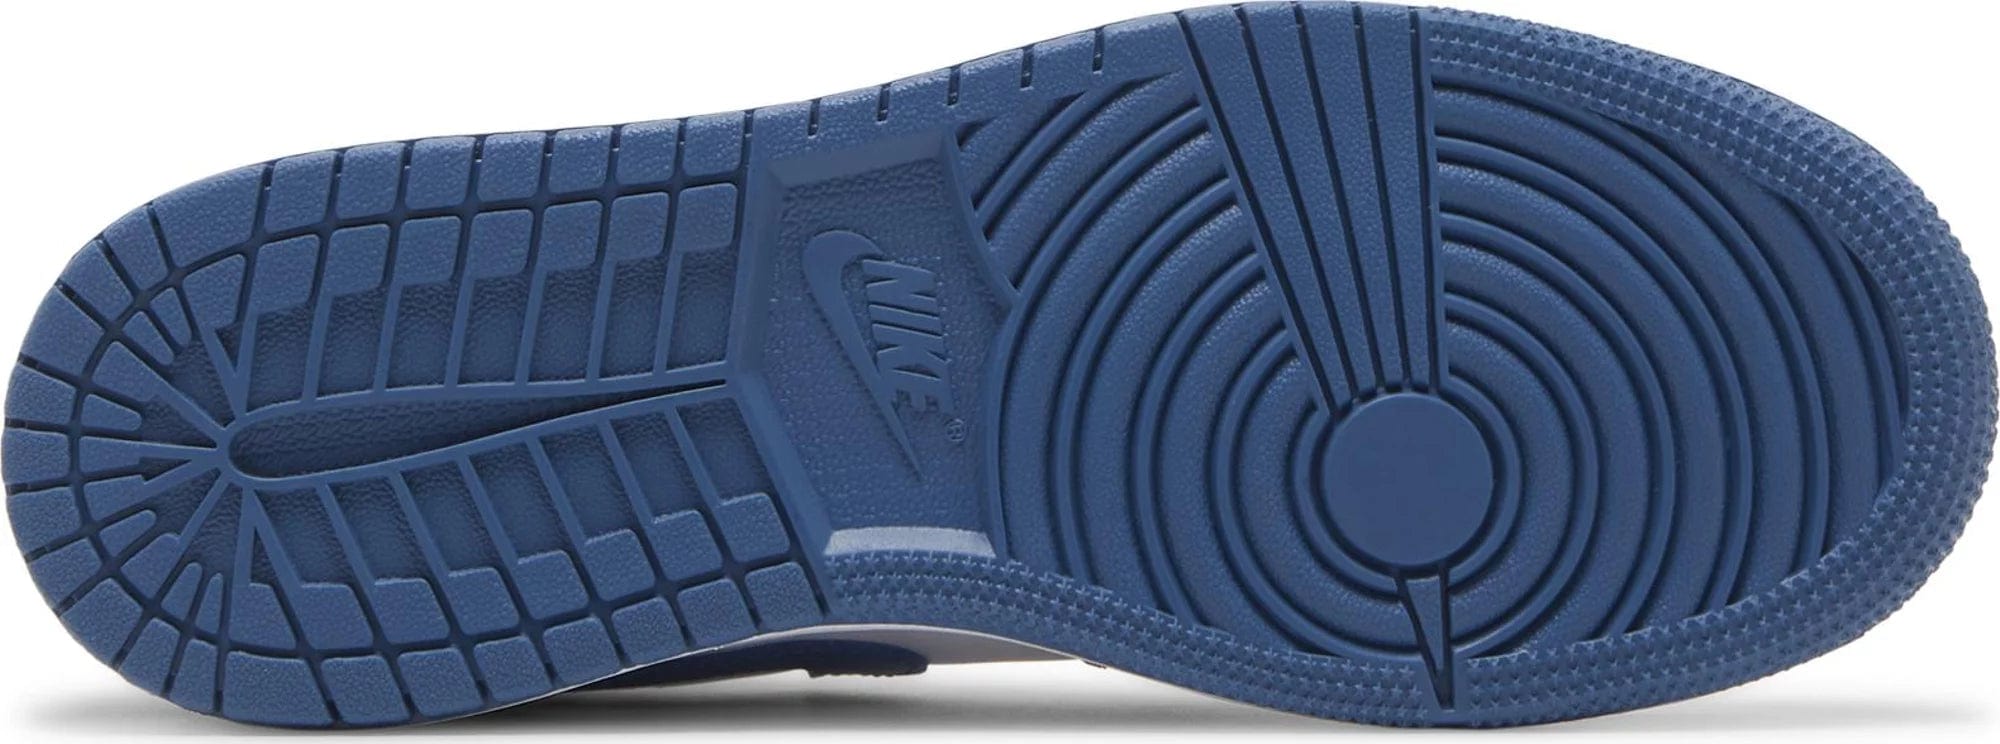 Nike Air Jordan 1 Mid True Blue Cement (GS) Women's